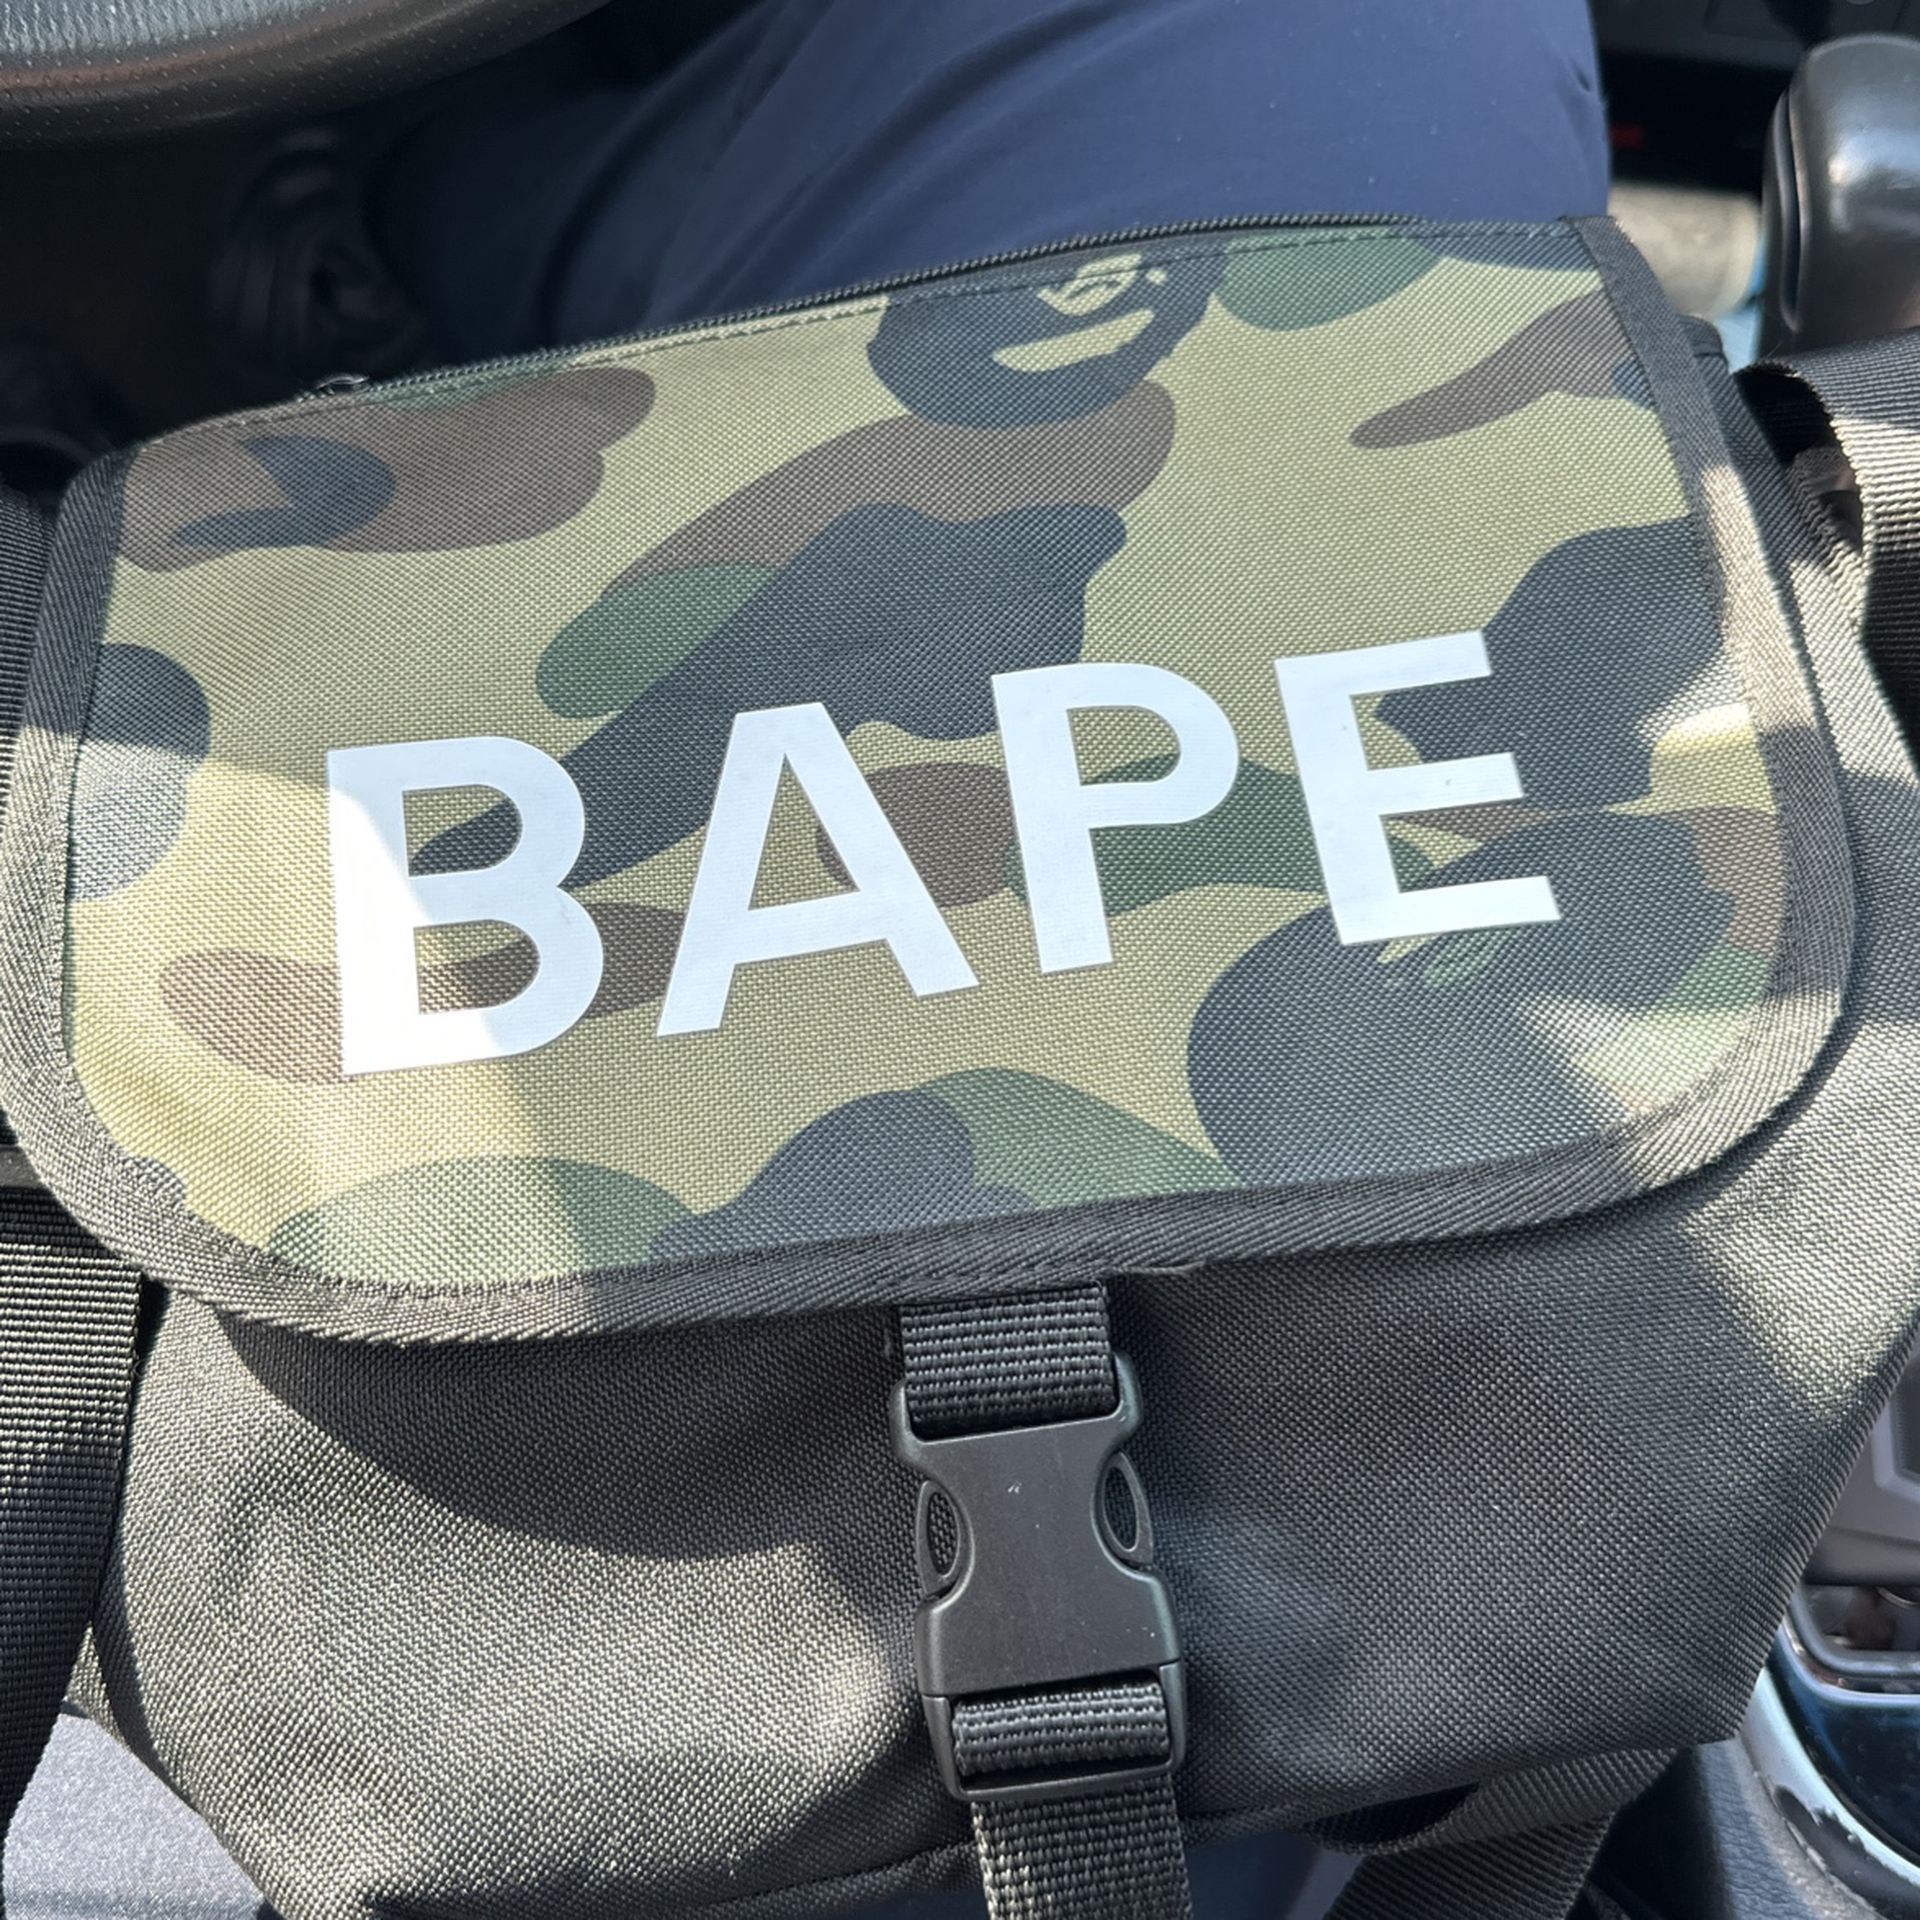 Bape Messenger Bag 